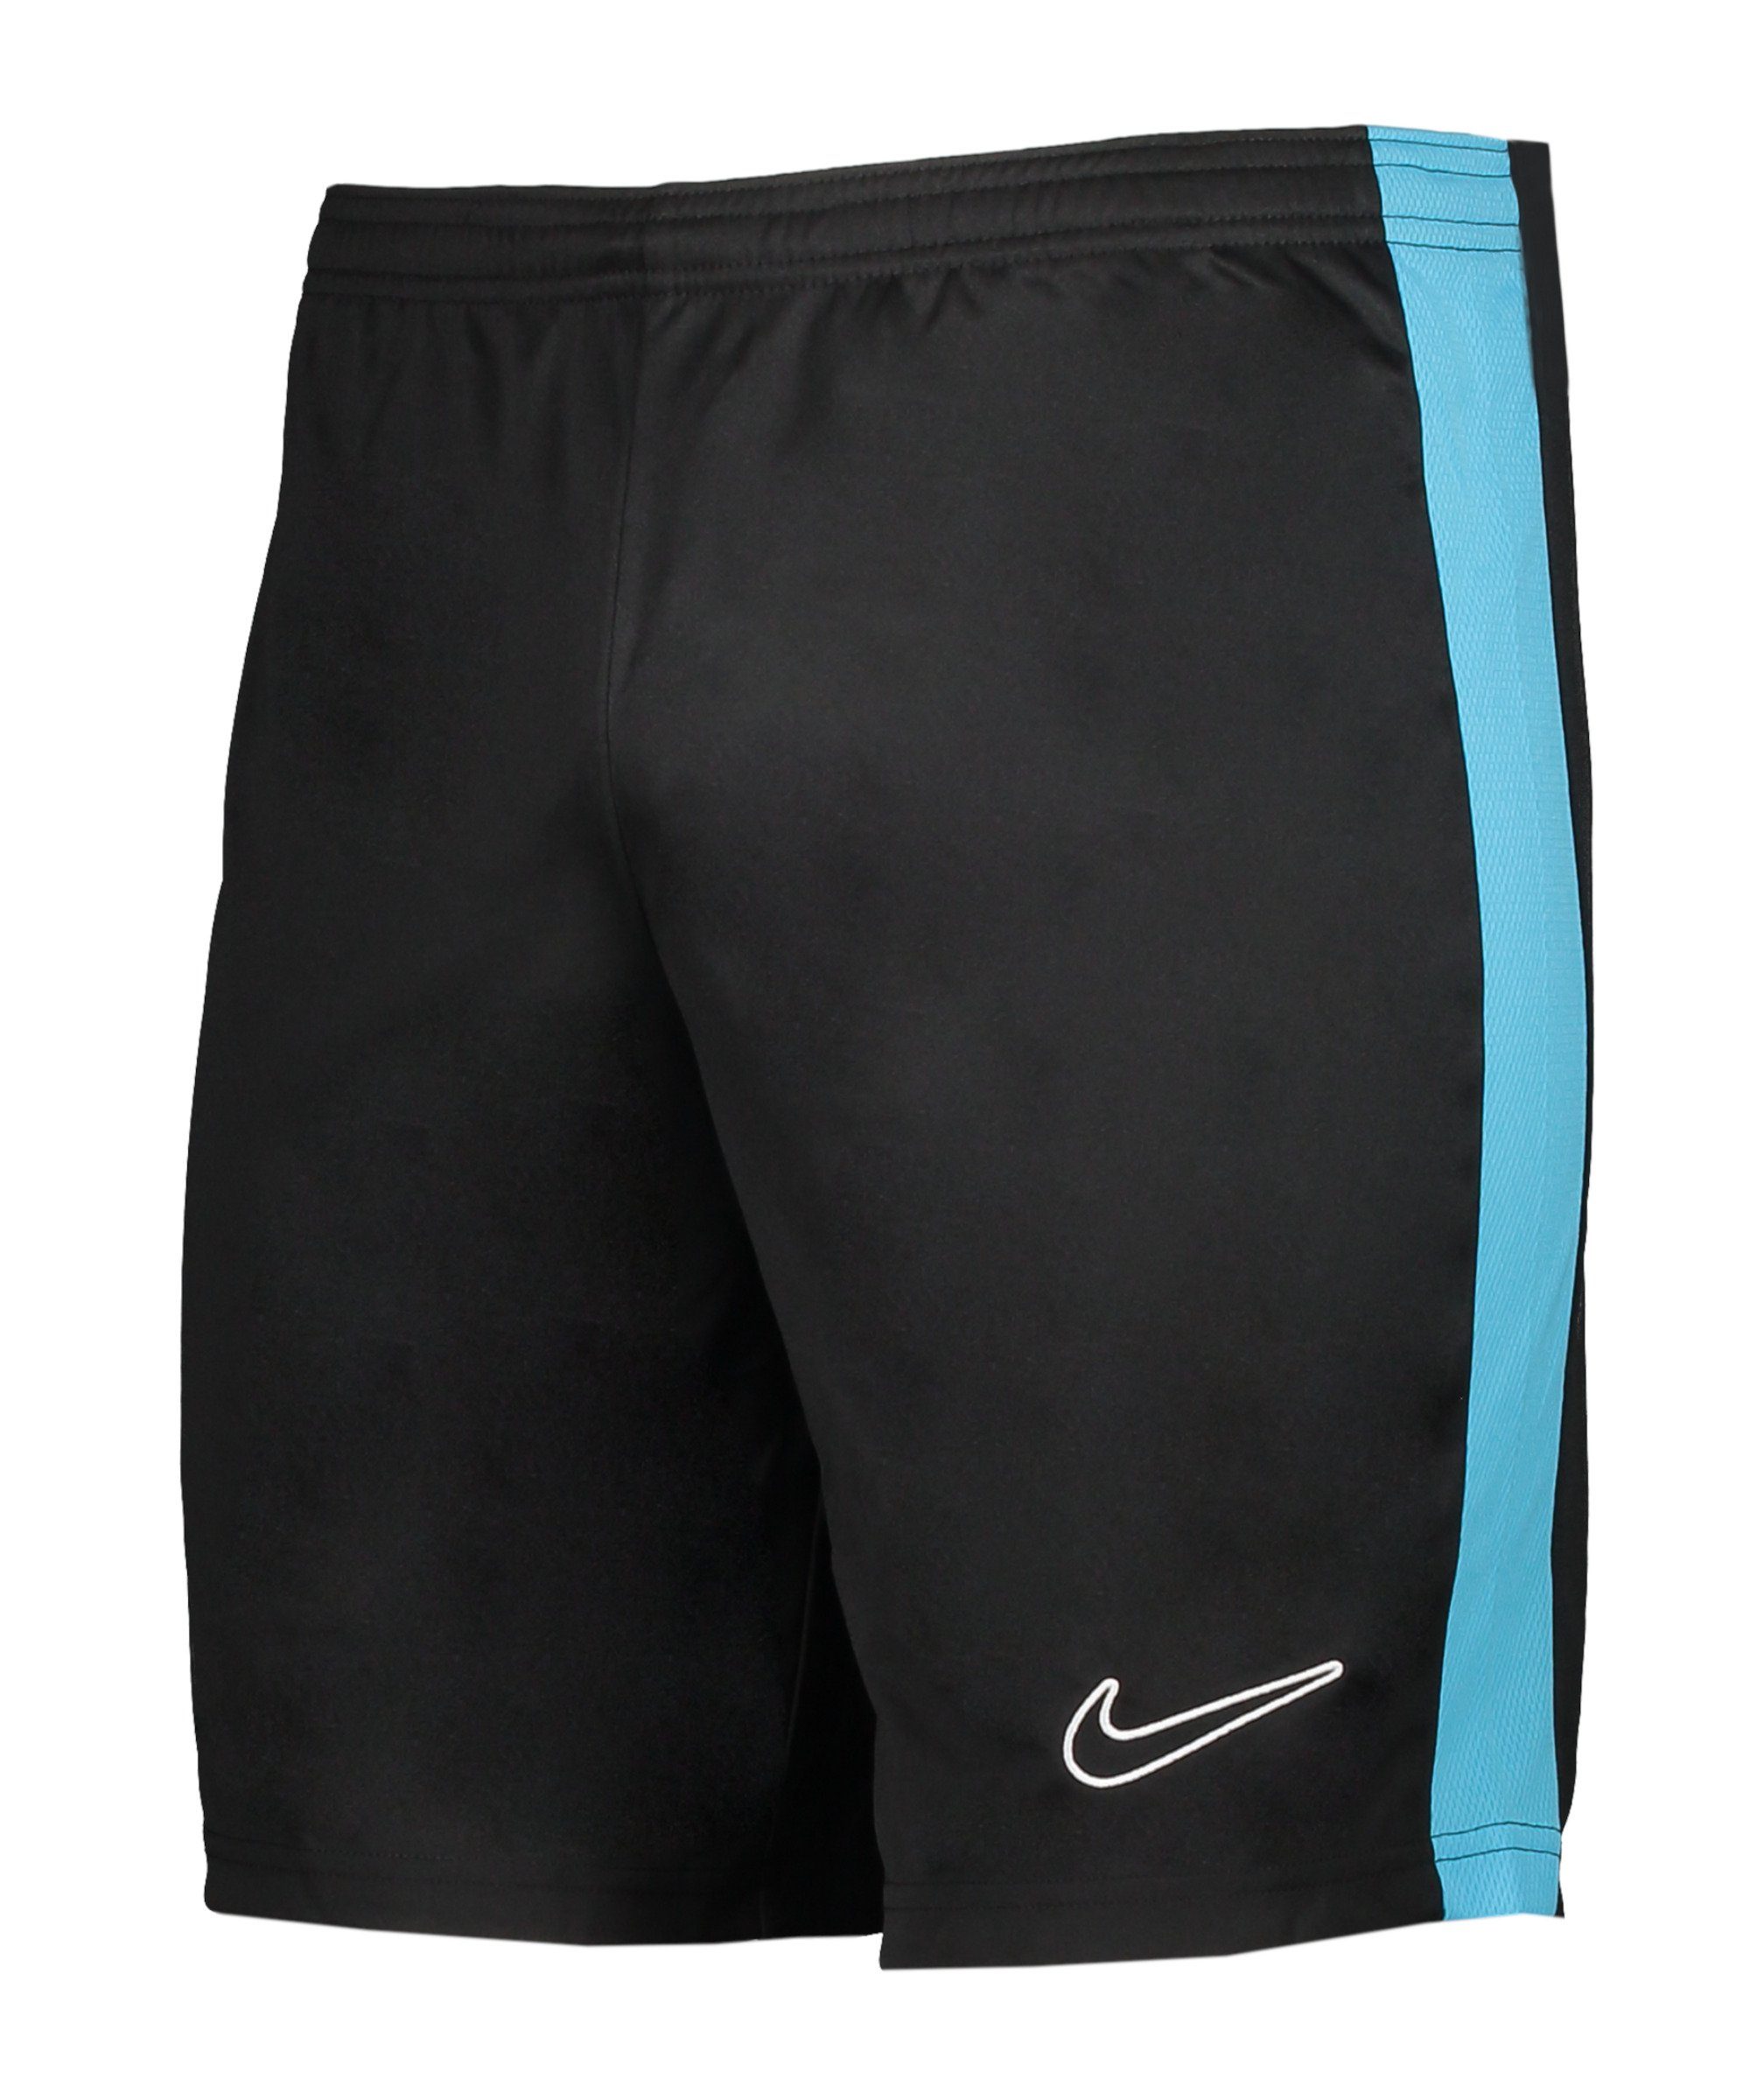 Nike Sporthose Academy Short schwarz